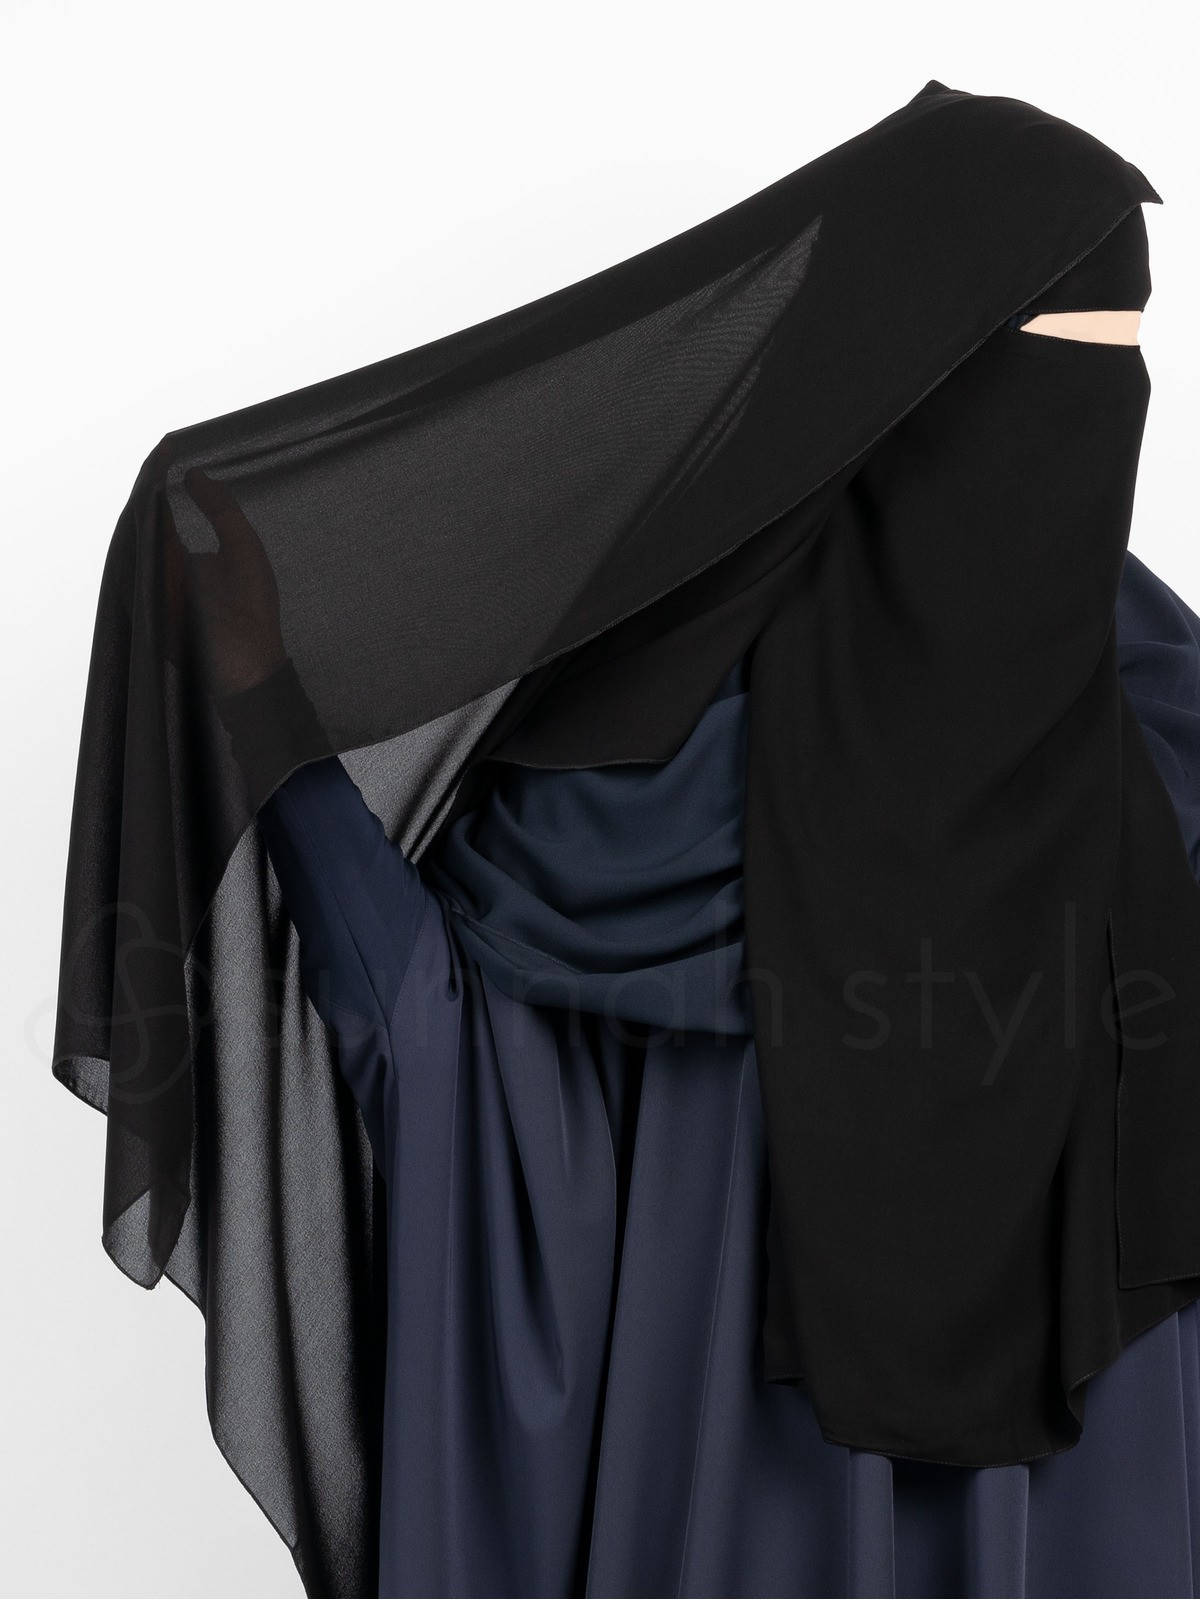 Sunnah Style - Two Layer Plus Niqab (Black)